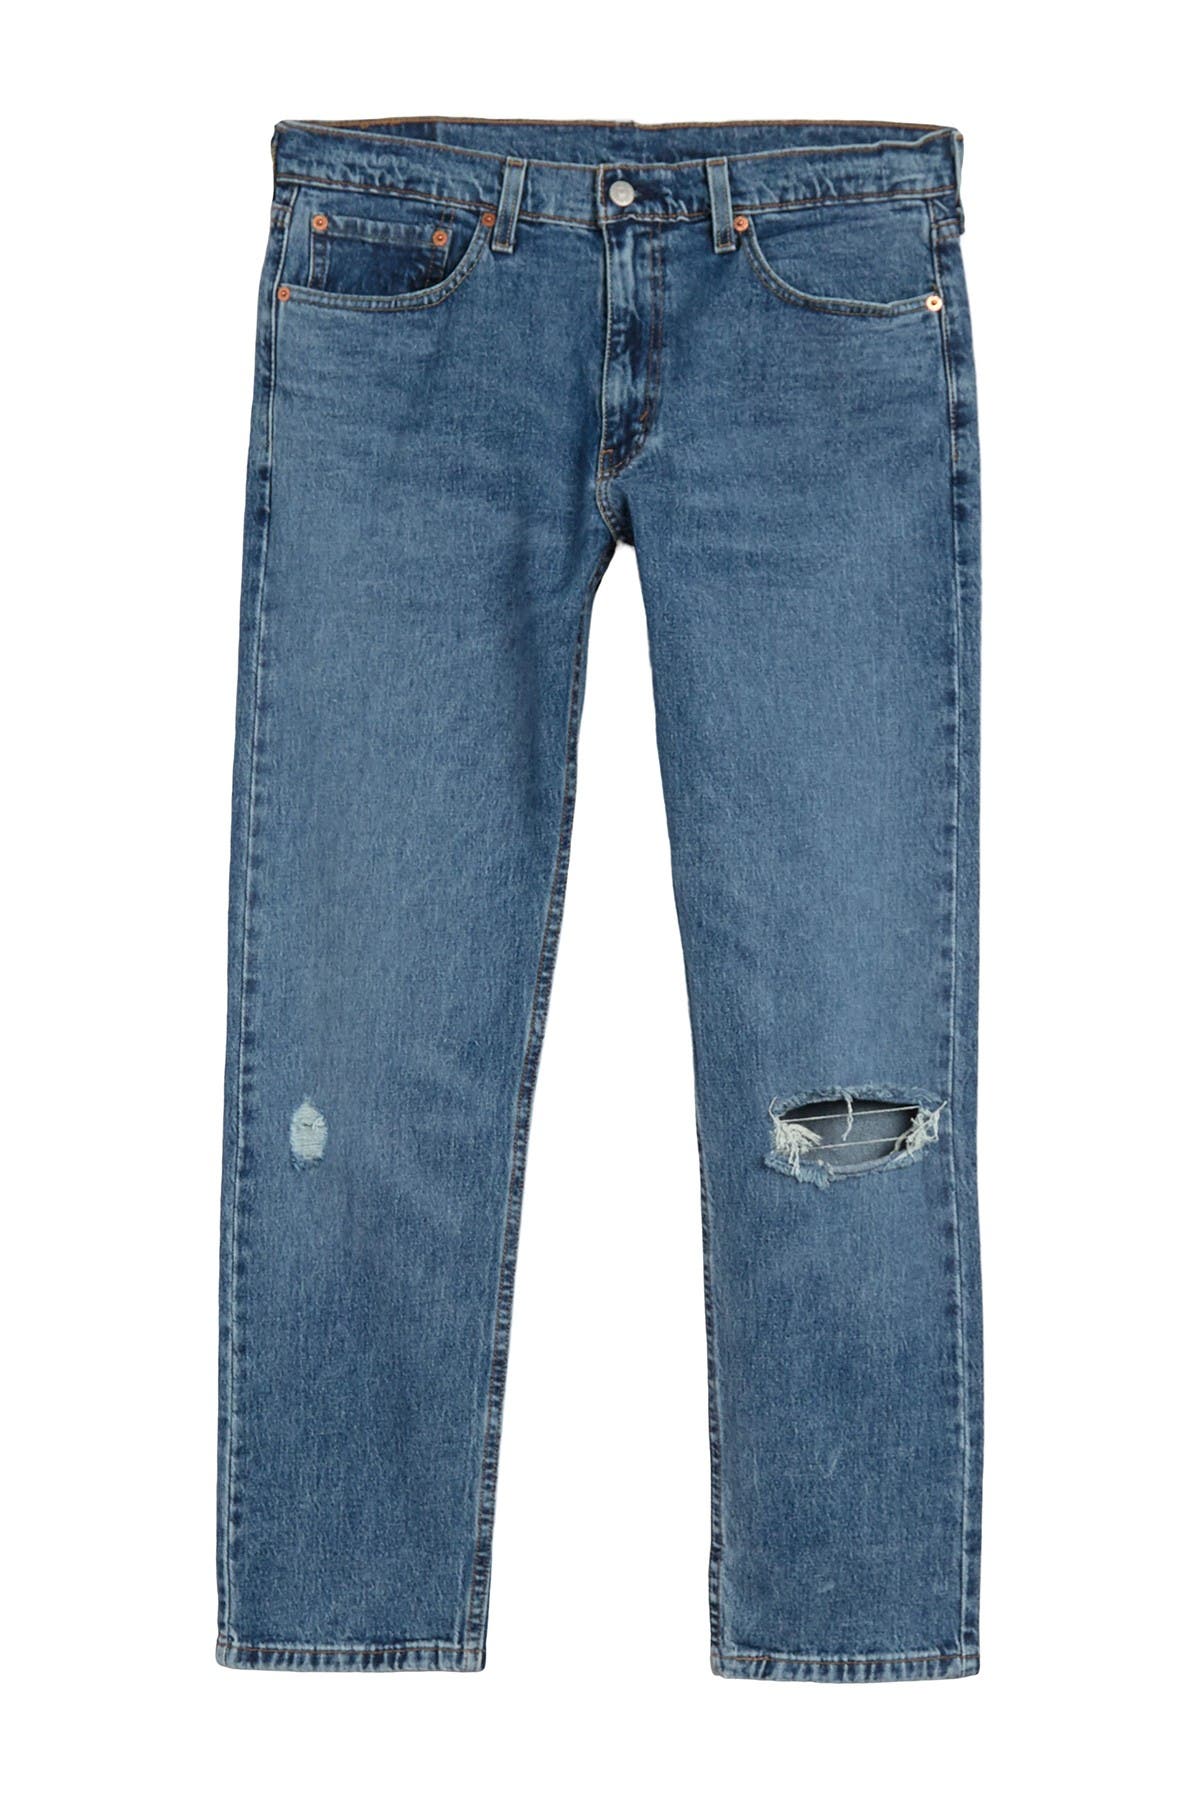 502 Taper Distressed Jeans | Nordstrom Rack